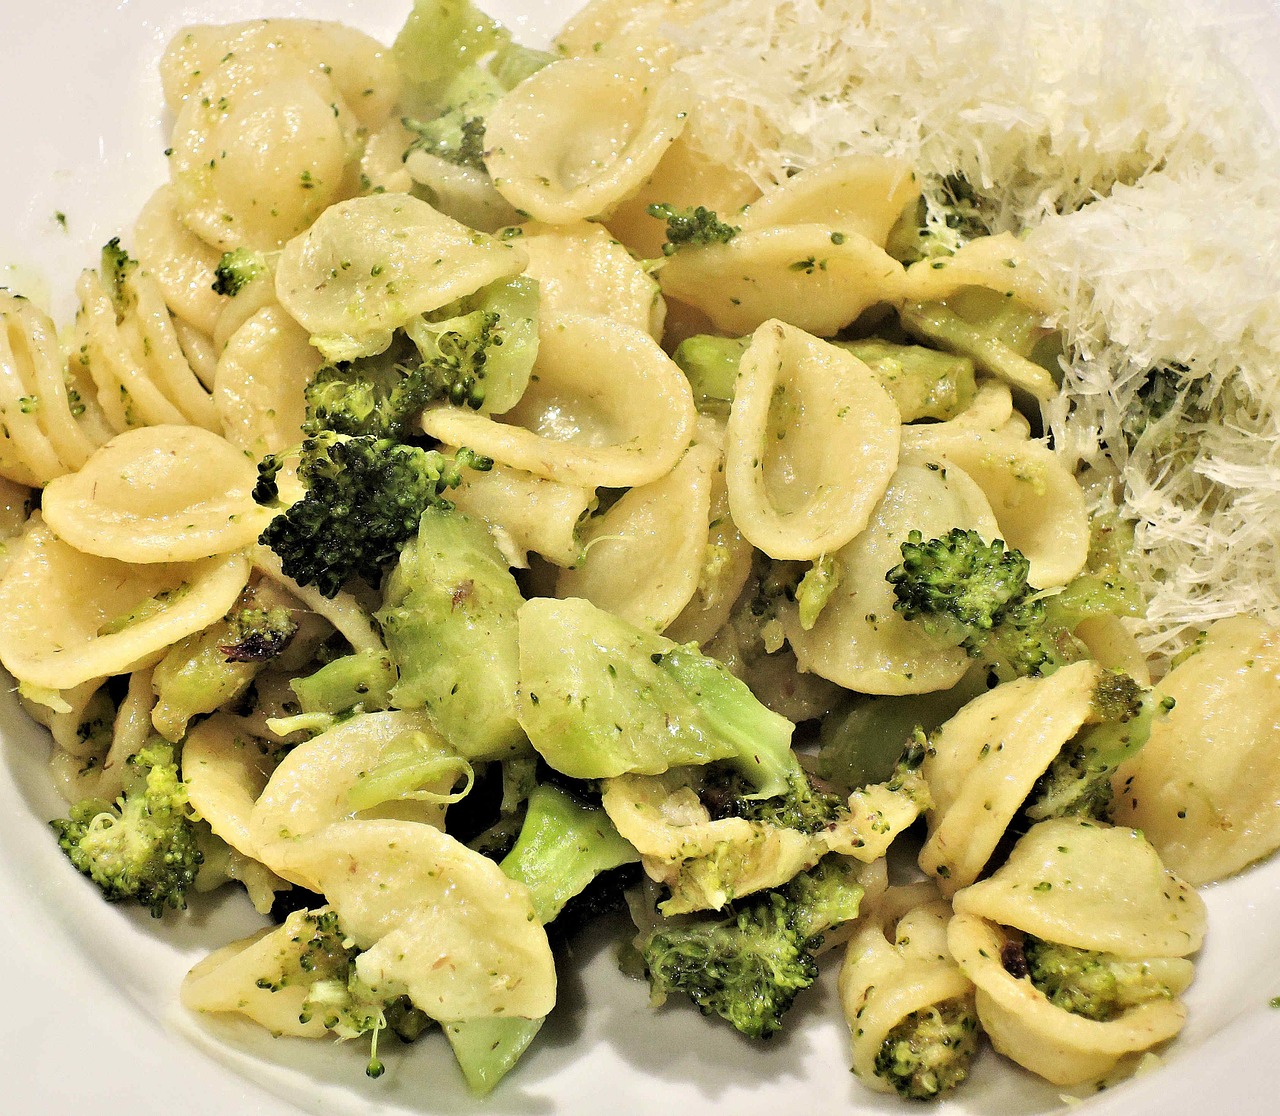 Broccoli With Parmesan Crust